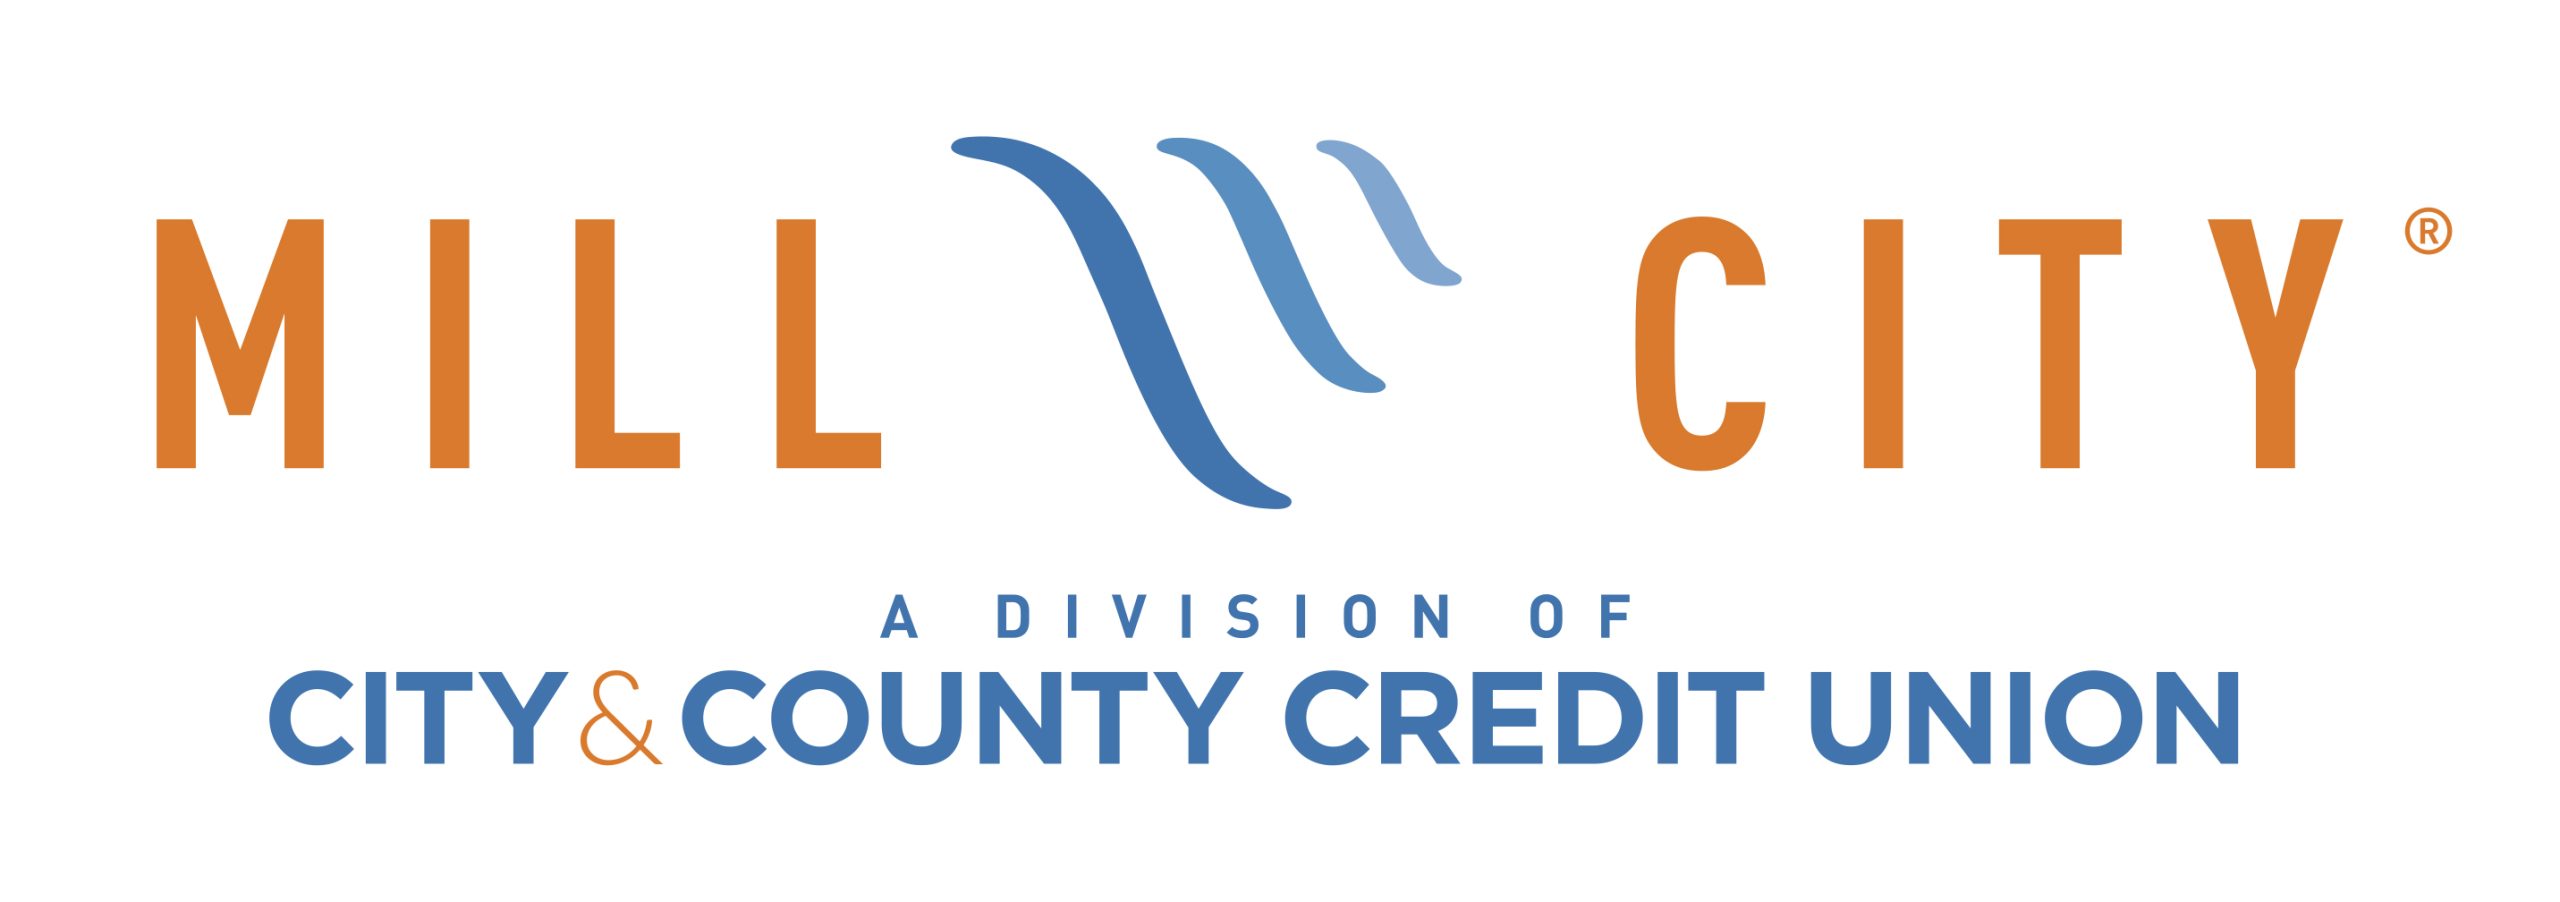 Mill City Credit Union Logo